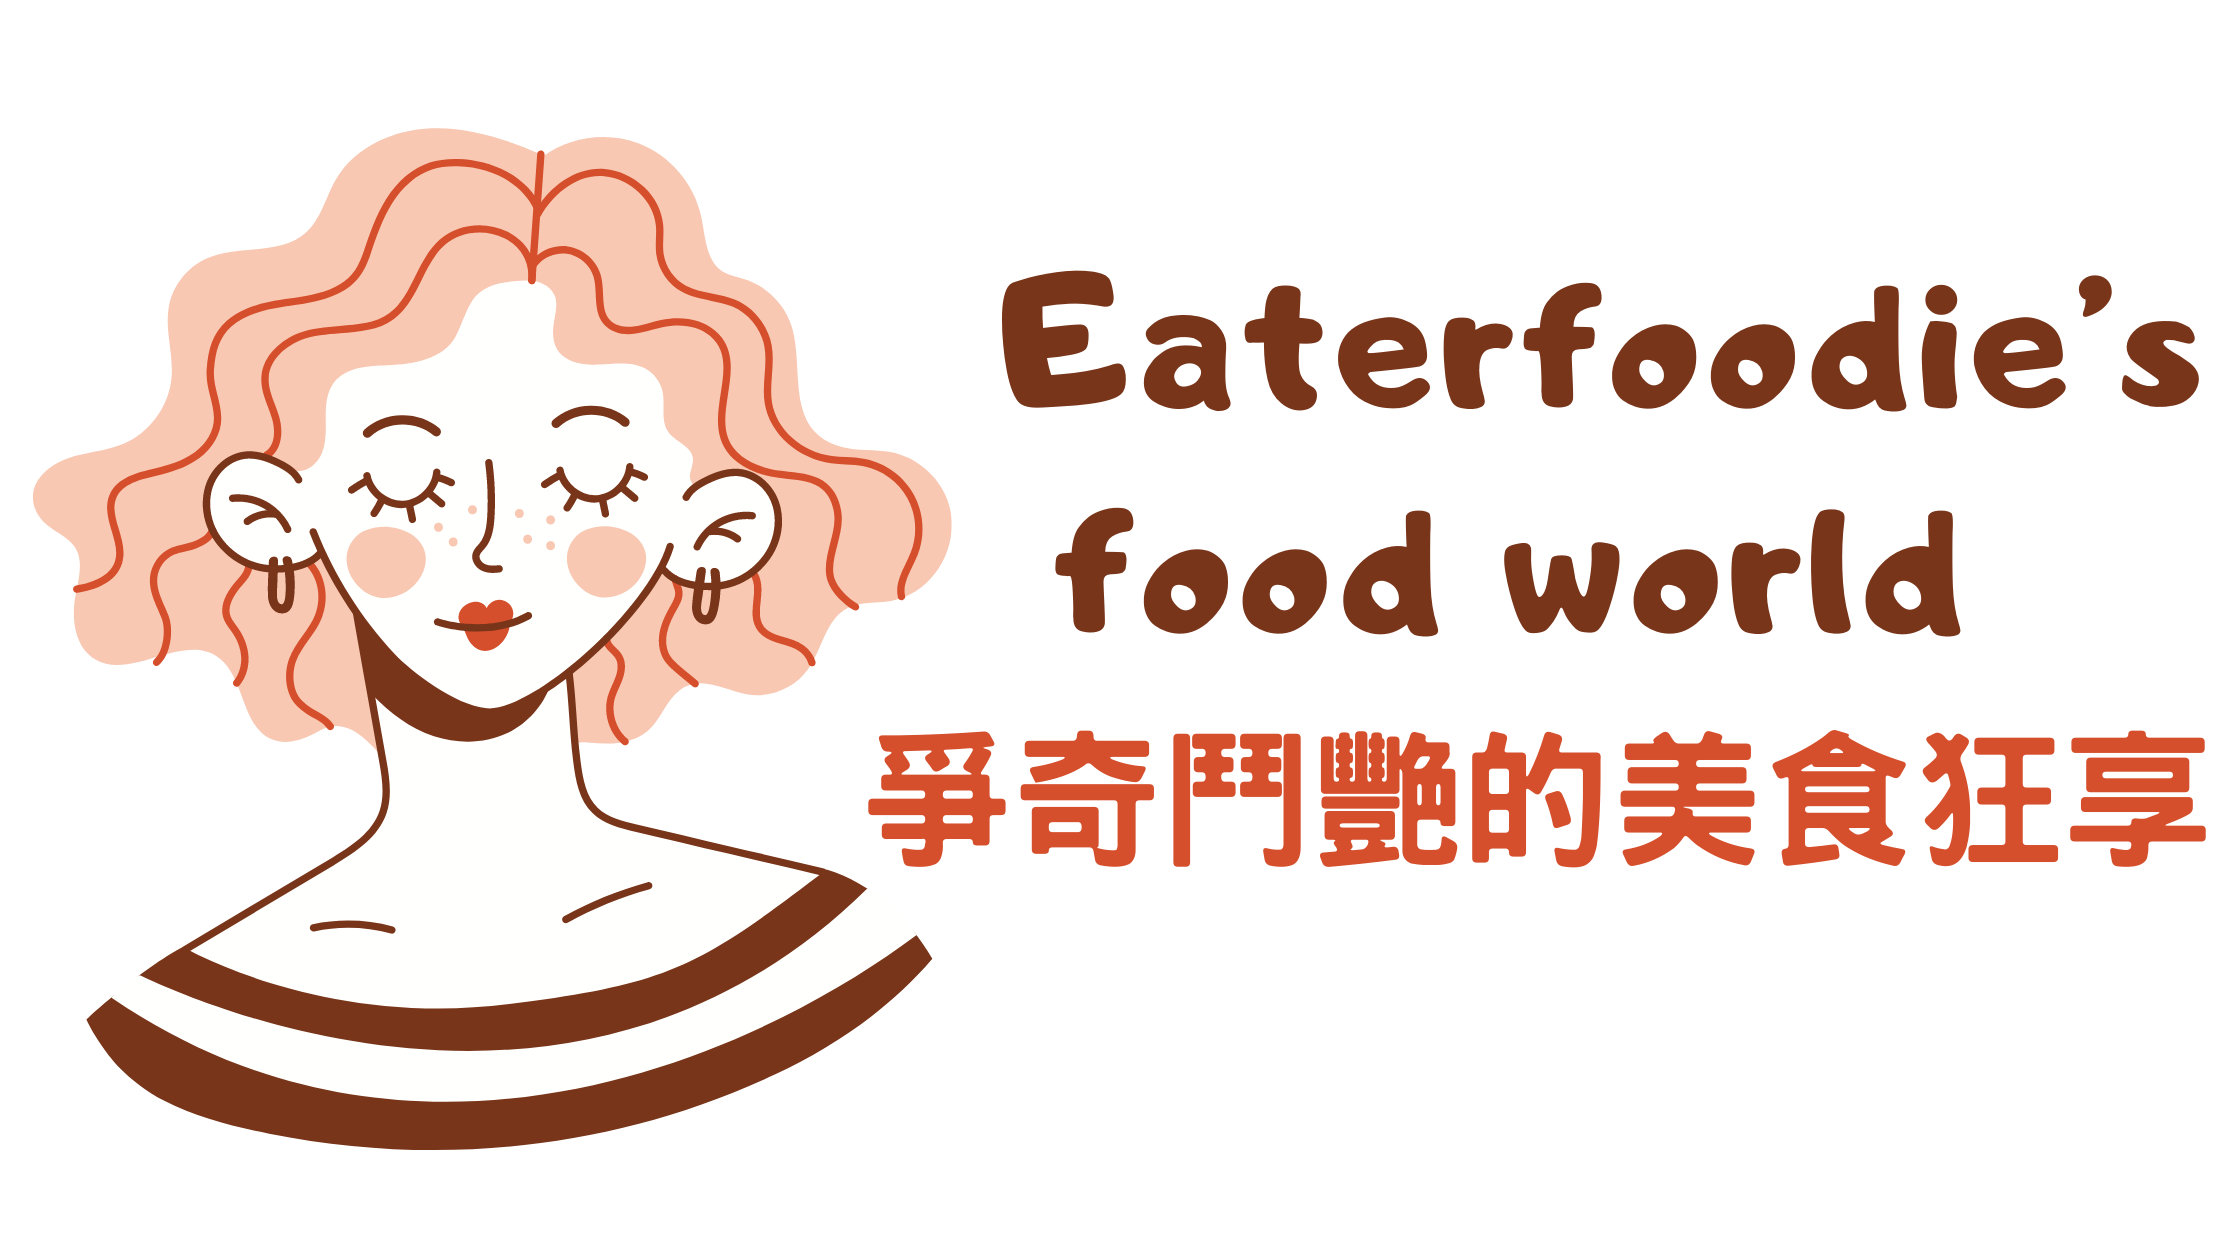 Eaterfoodie's Food World